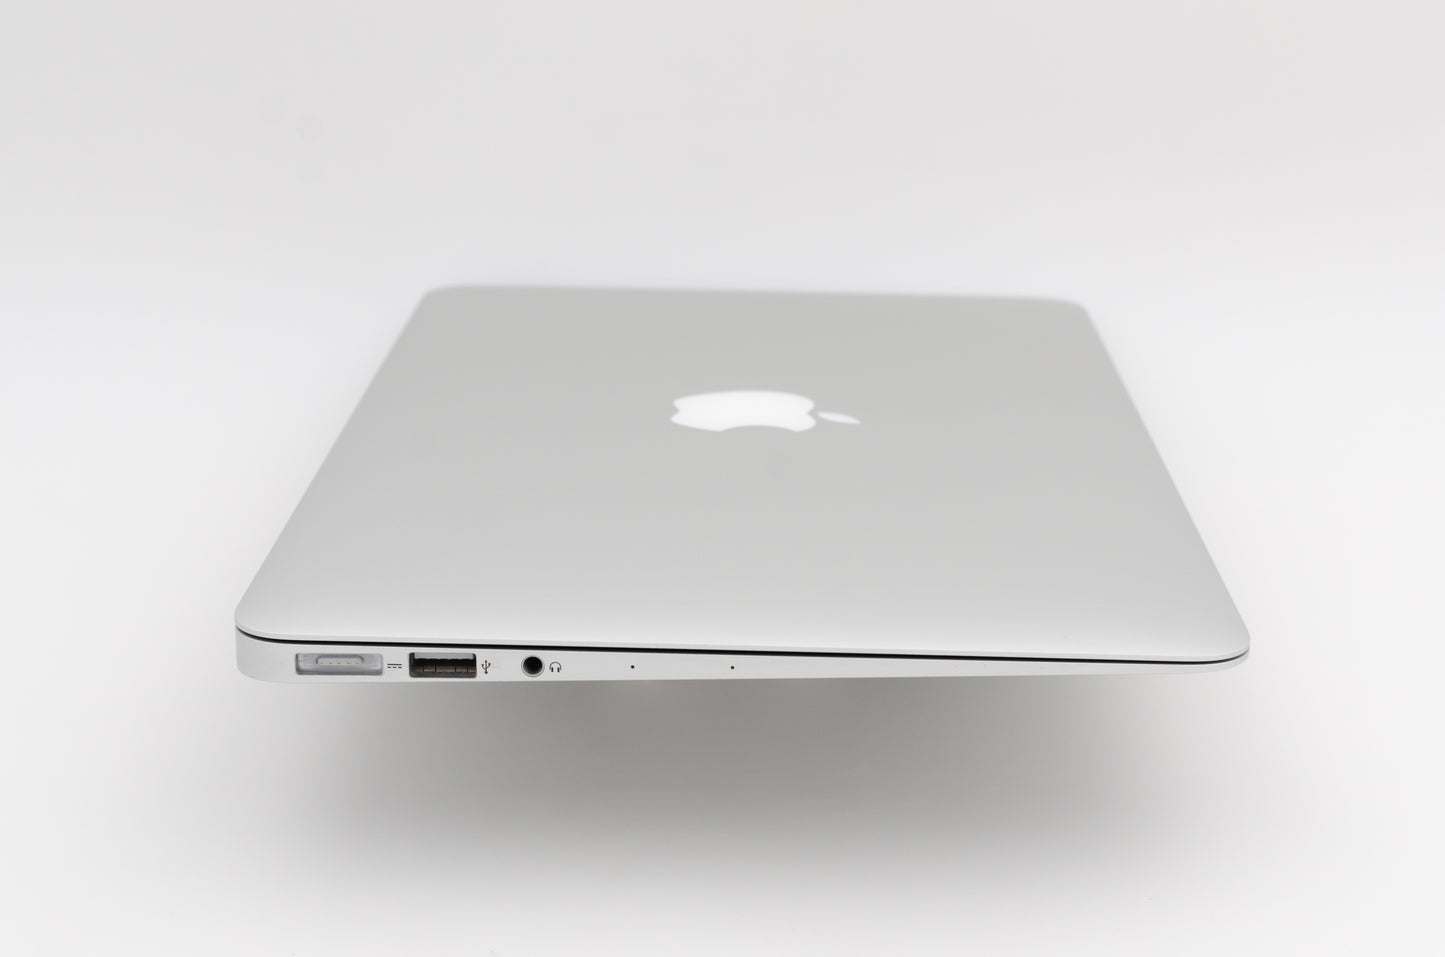 apple-mid-2012-11.6-inch-macbook-air-a1465-aluminum-dci7 - 2ghz processor, 8gb ram, hd 4000 - 512mb gpu-md845ll/a-4